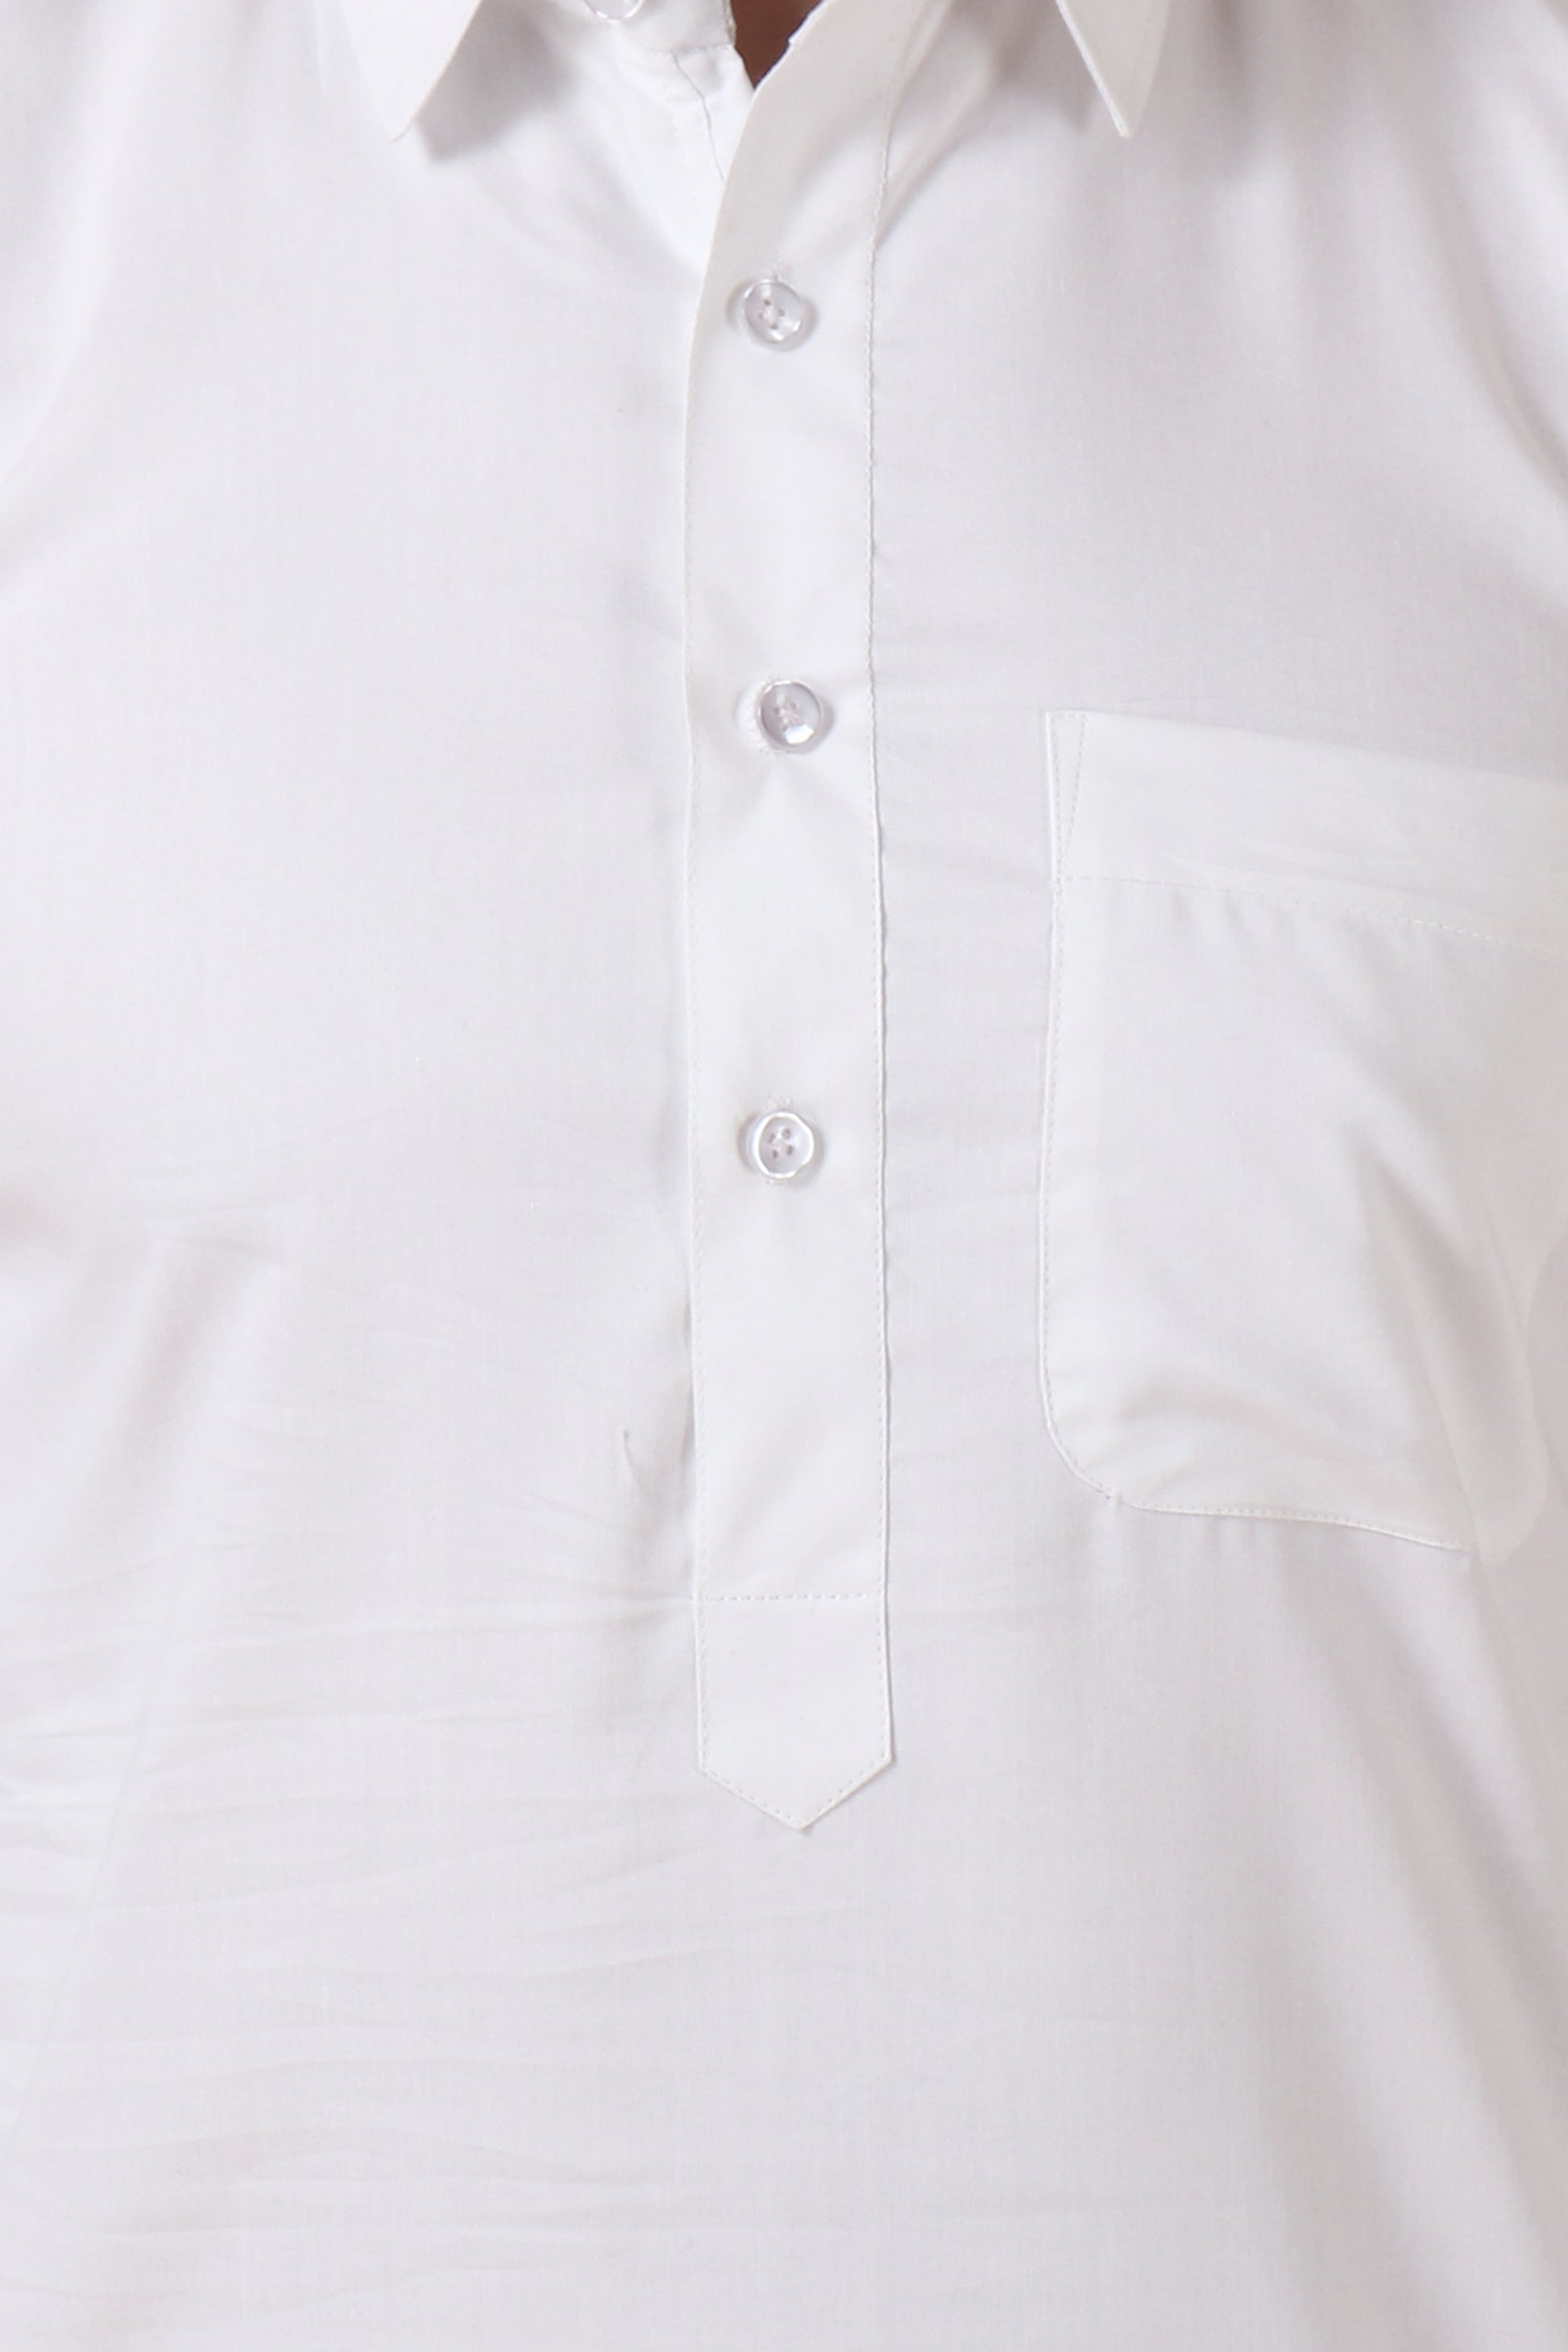 White Kurta Pajama For Men